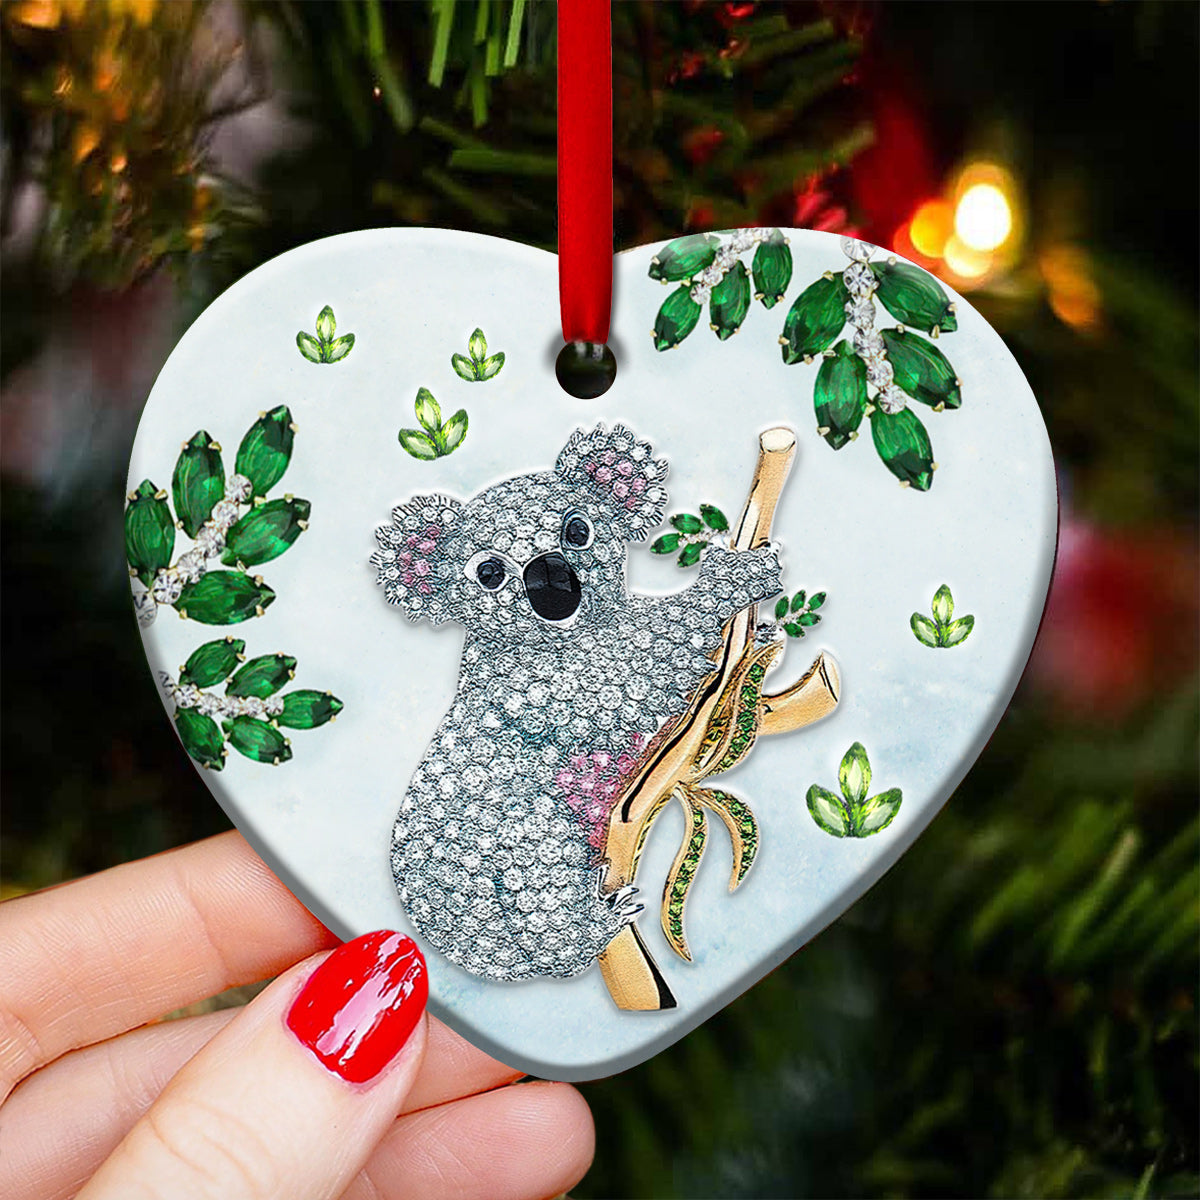 Koala Advice Heart Ornament - Christmas Ornament - Ciaocustom